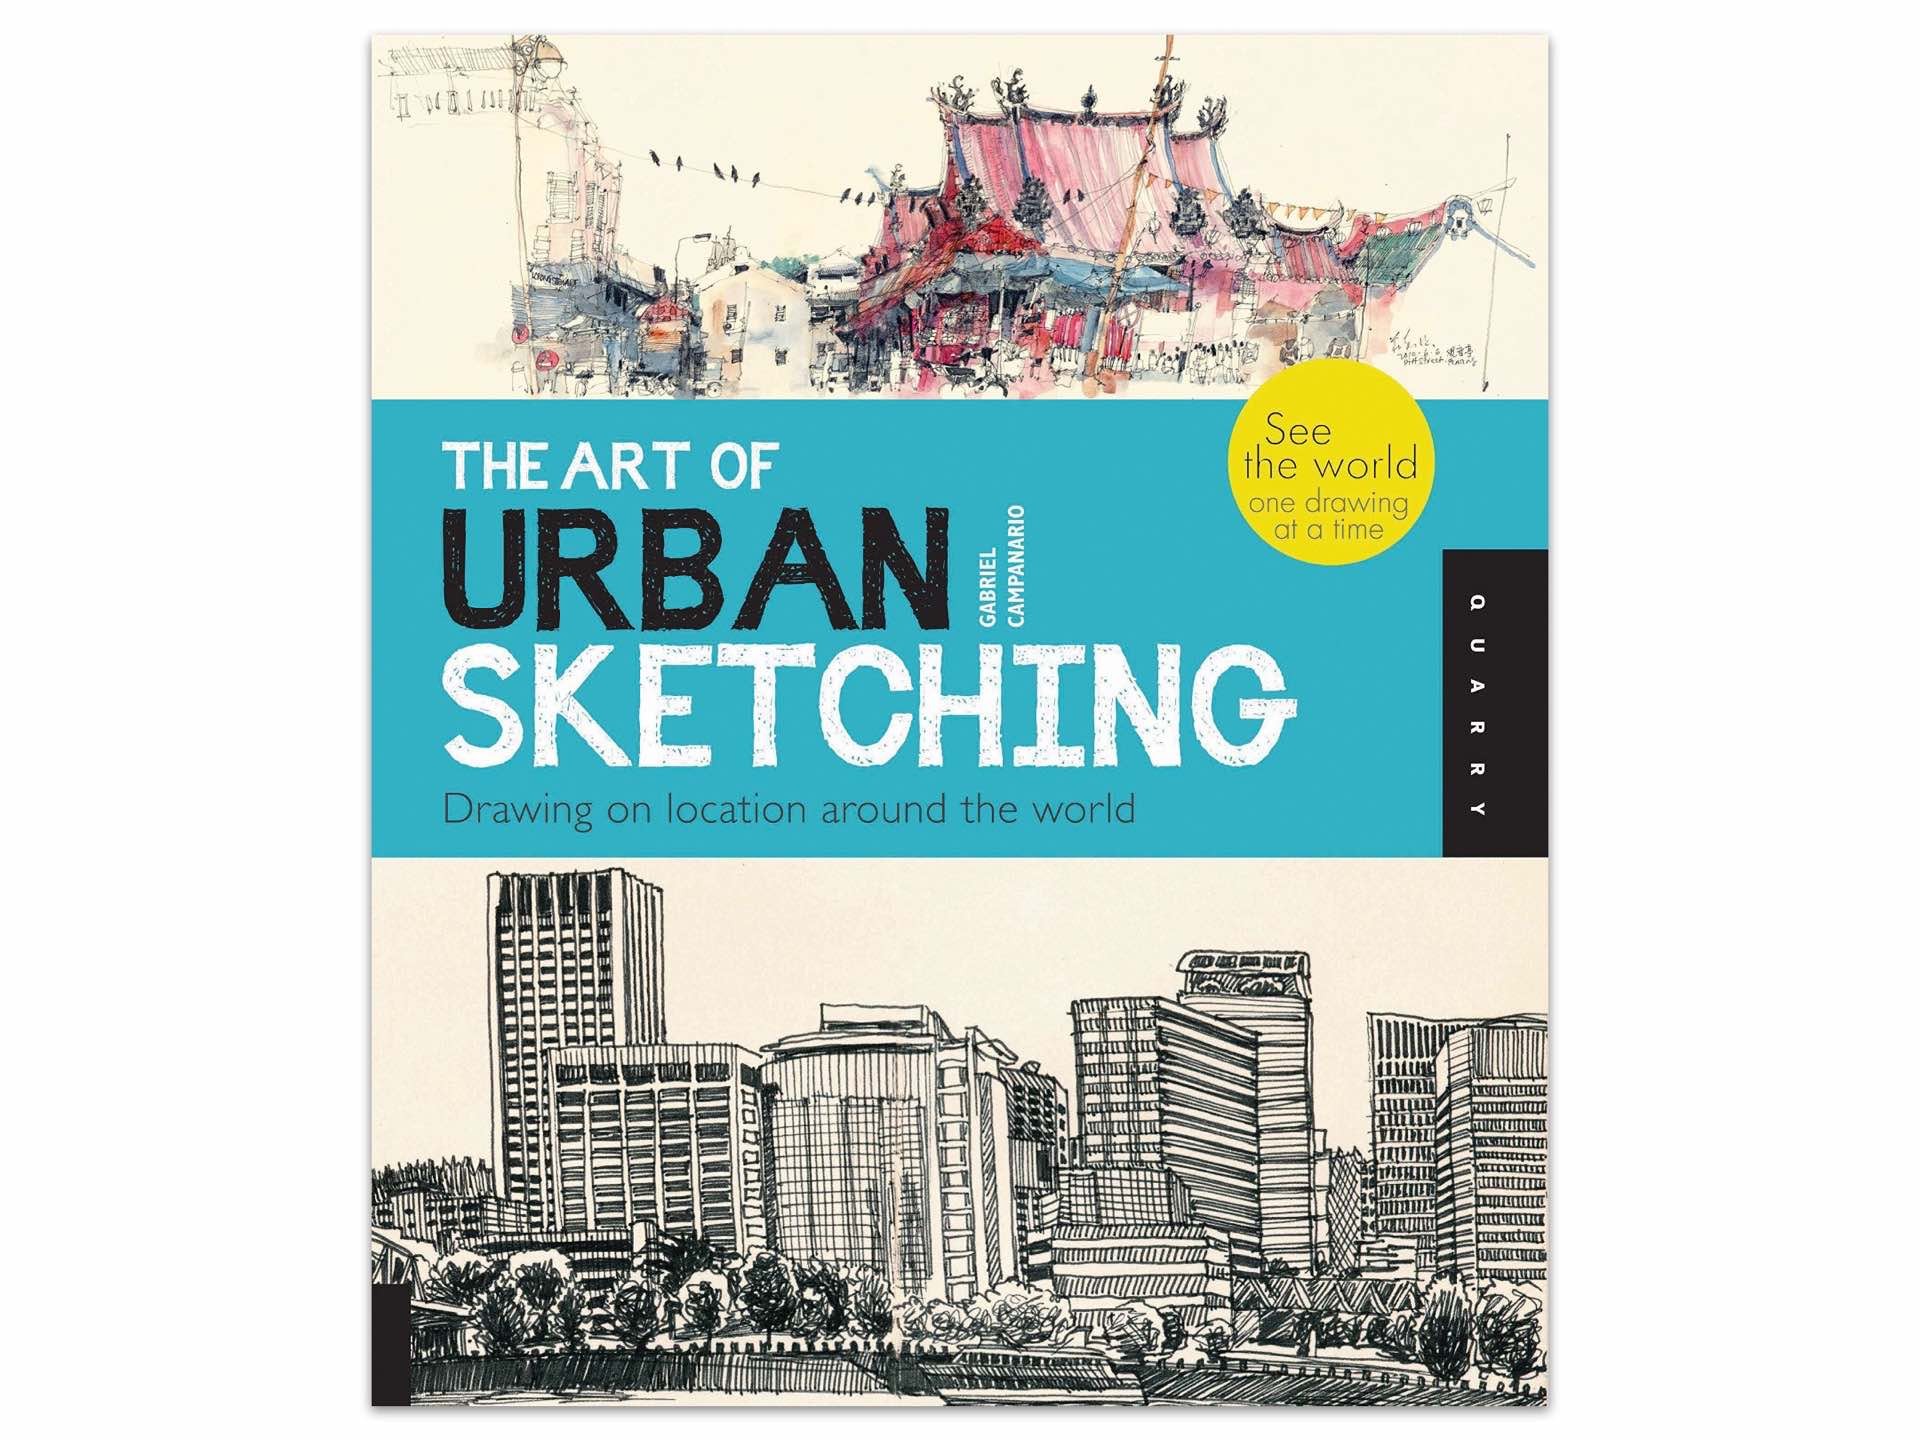 ‘The Art of Urban Sketching’ by Gabriel Campanario